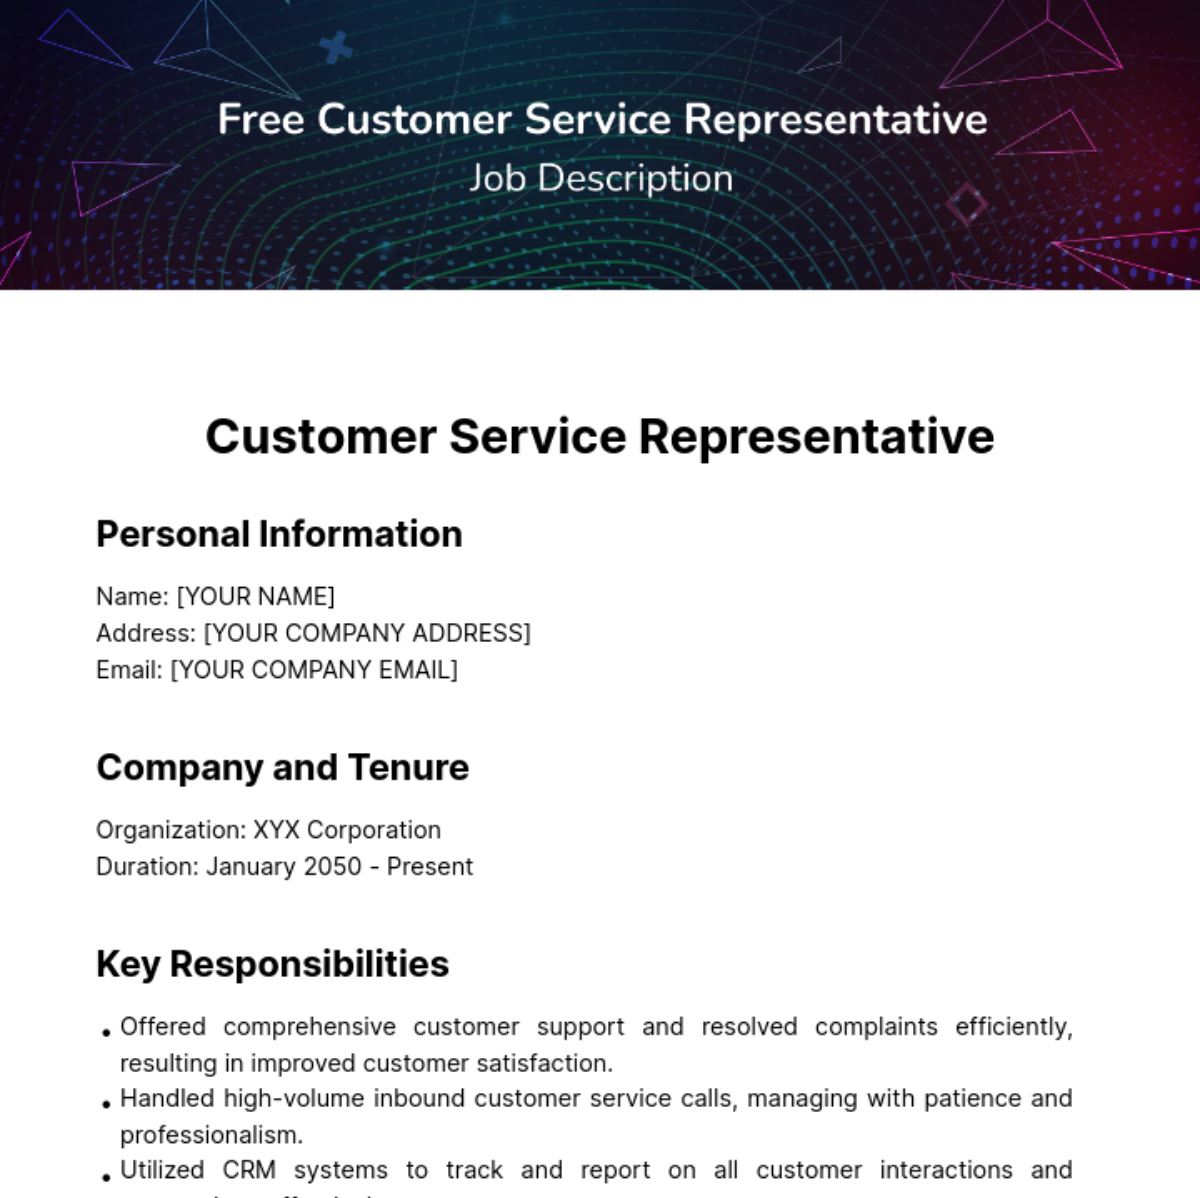 Free Customer Service Job Description for Resume Template